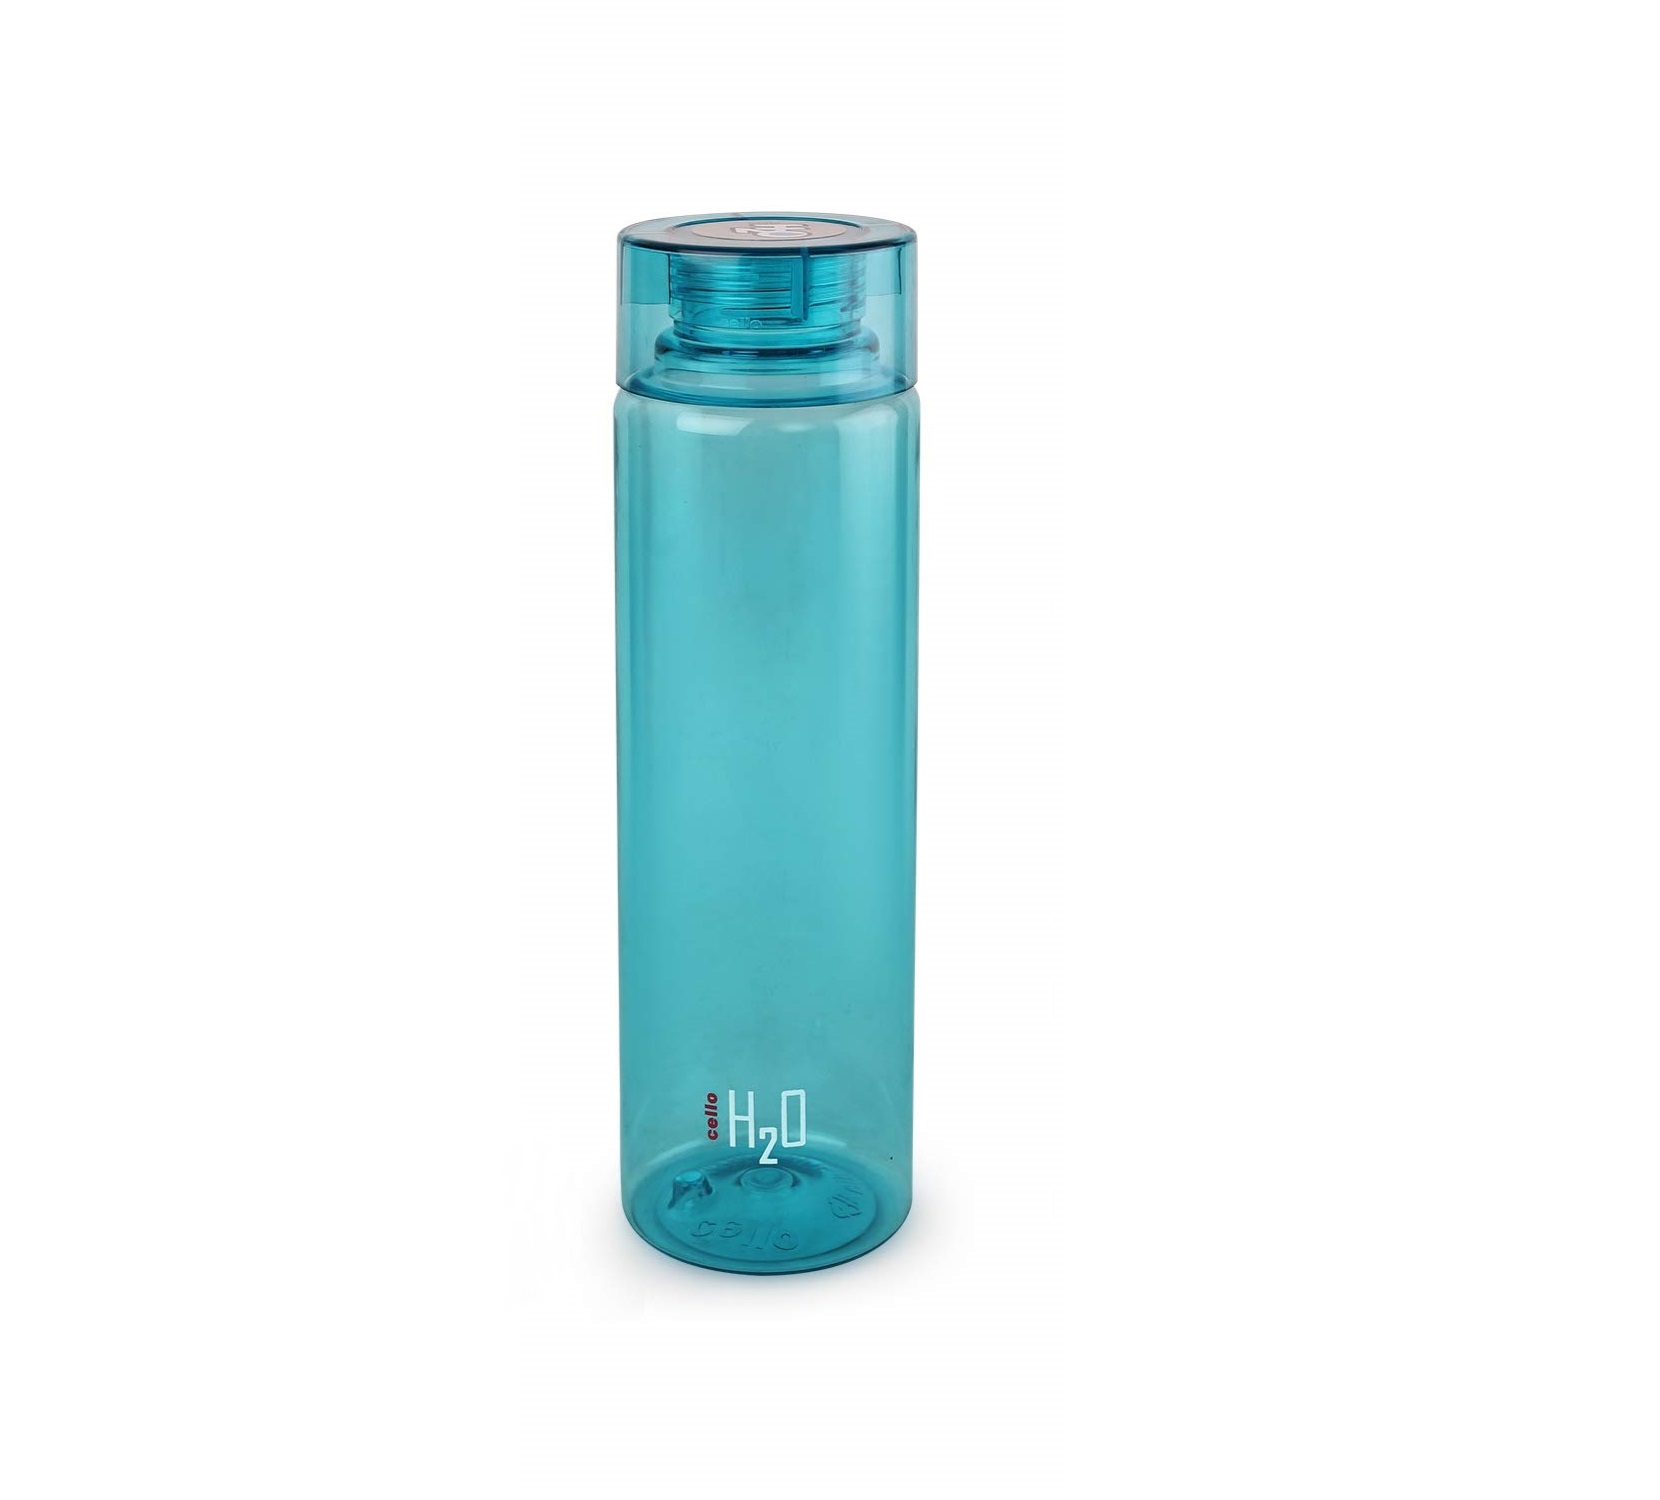 Cello H2O Premium Plastic Water Bottle (Green, 750ml)